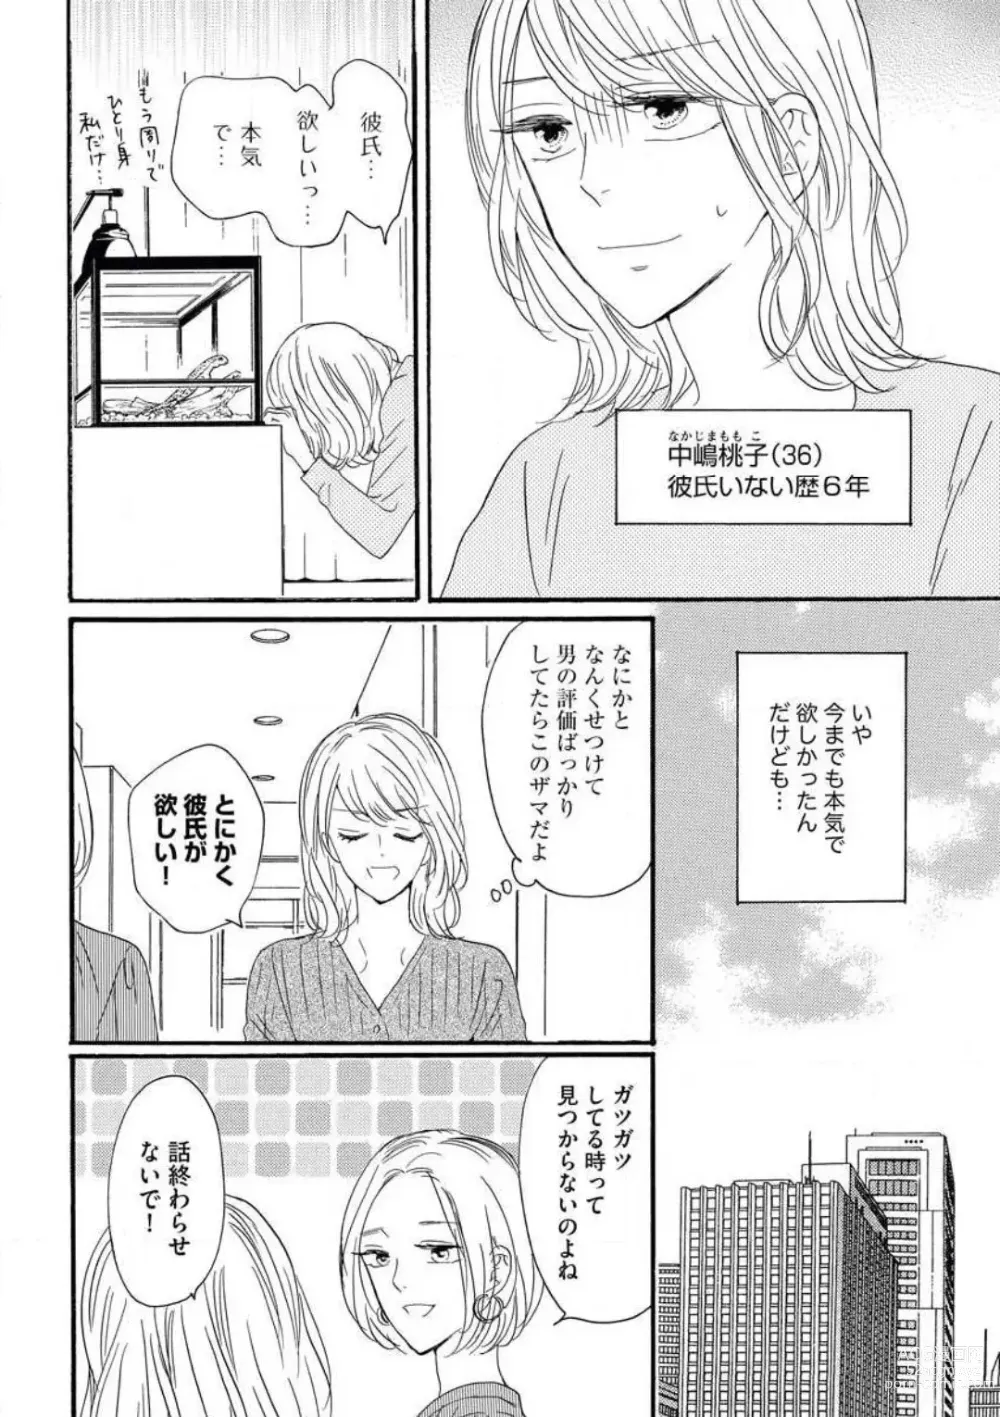 Page 3 of manga Giwaku no Rabu Matchingu